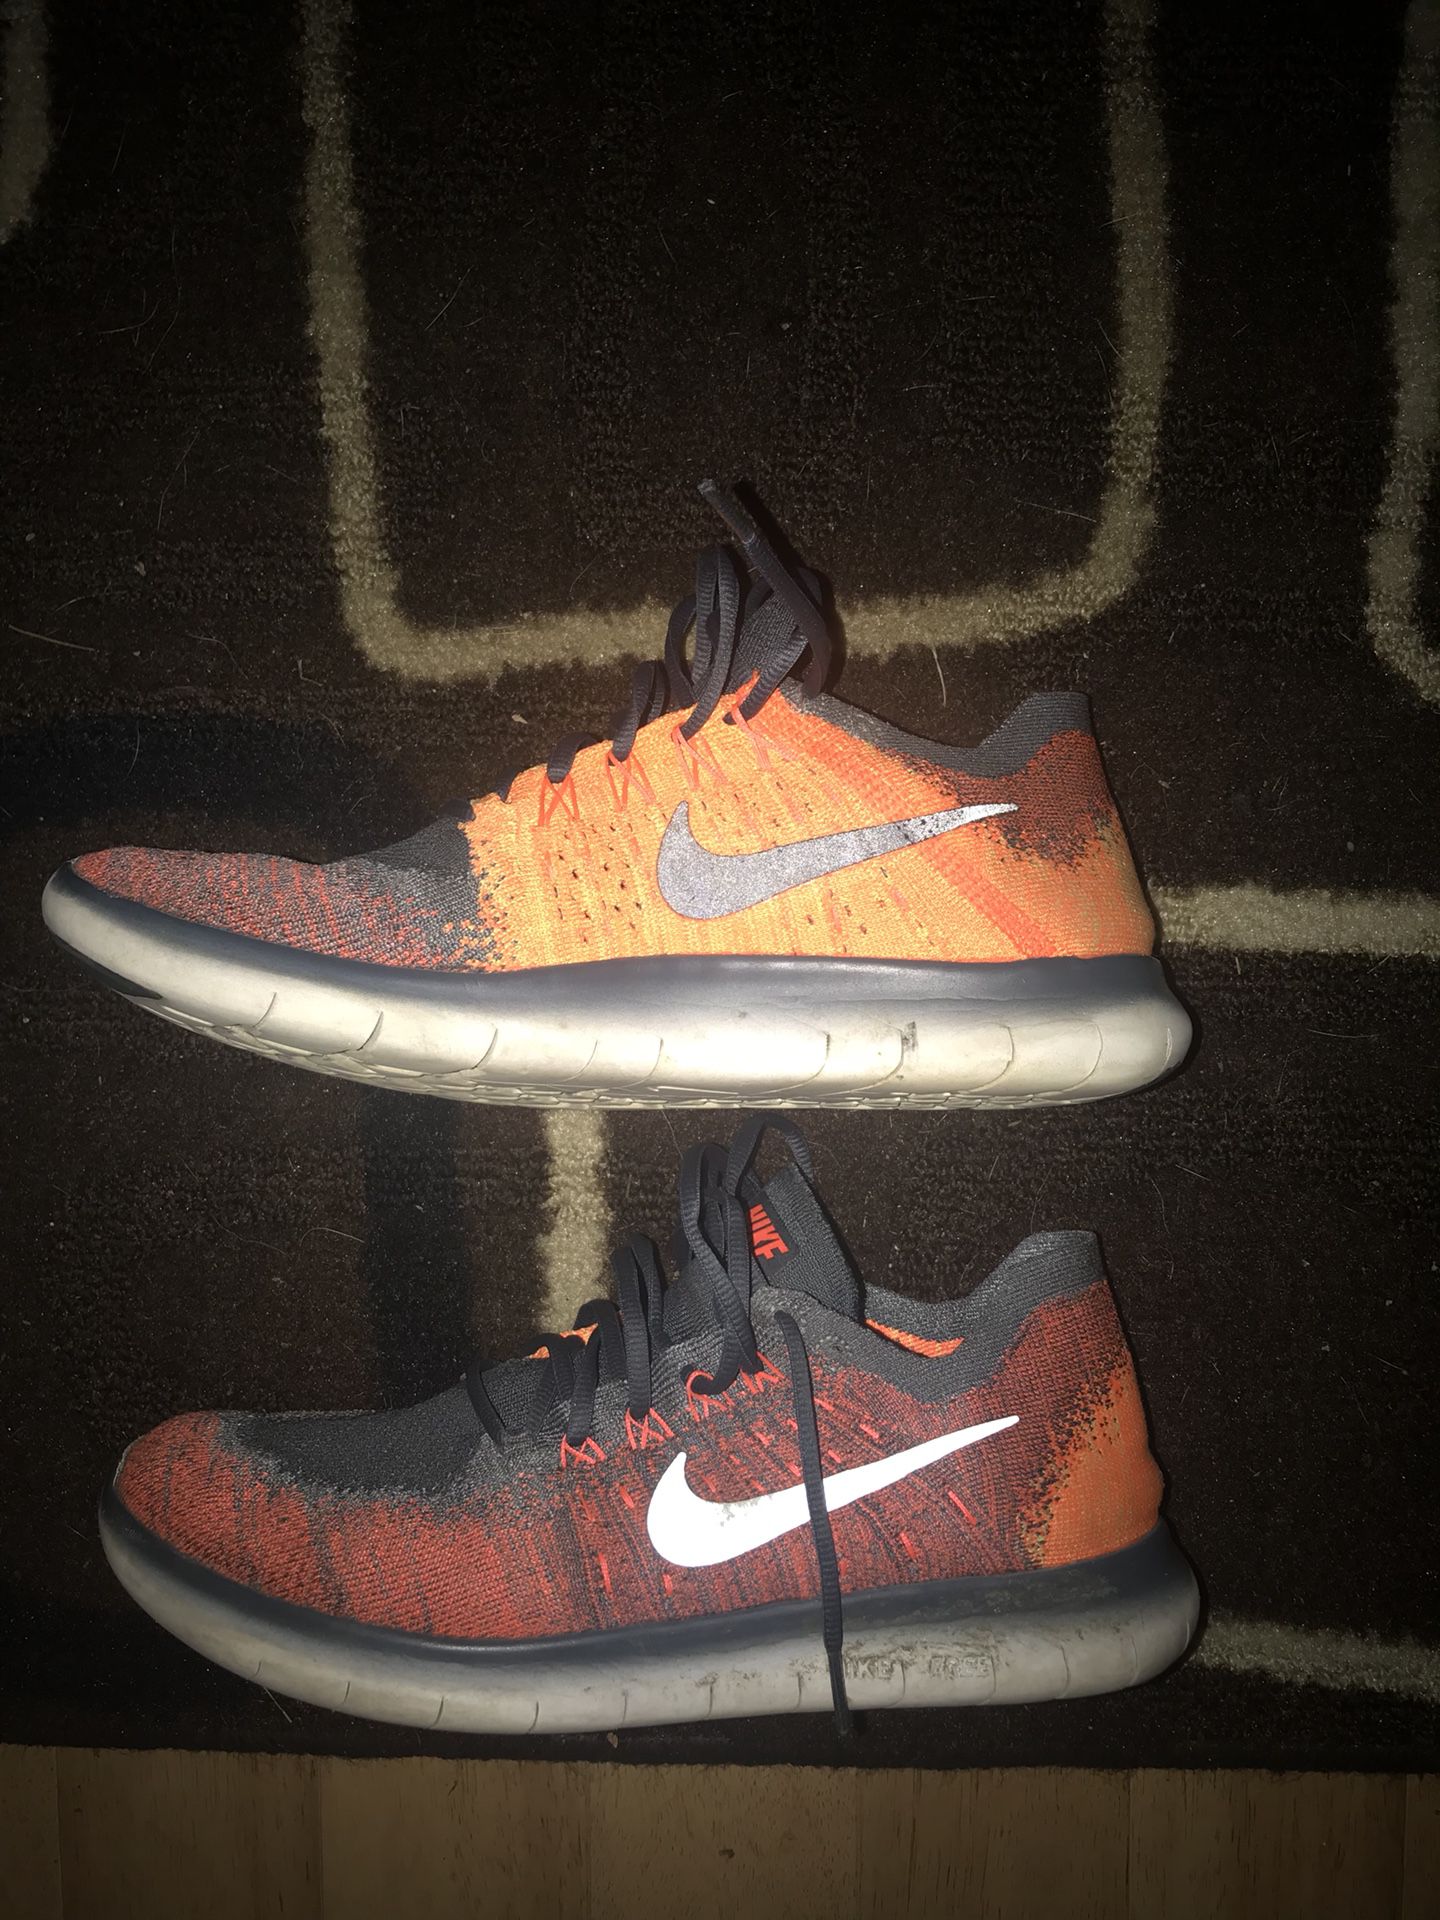 Orange and grey Nike running shoes.